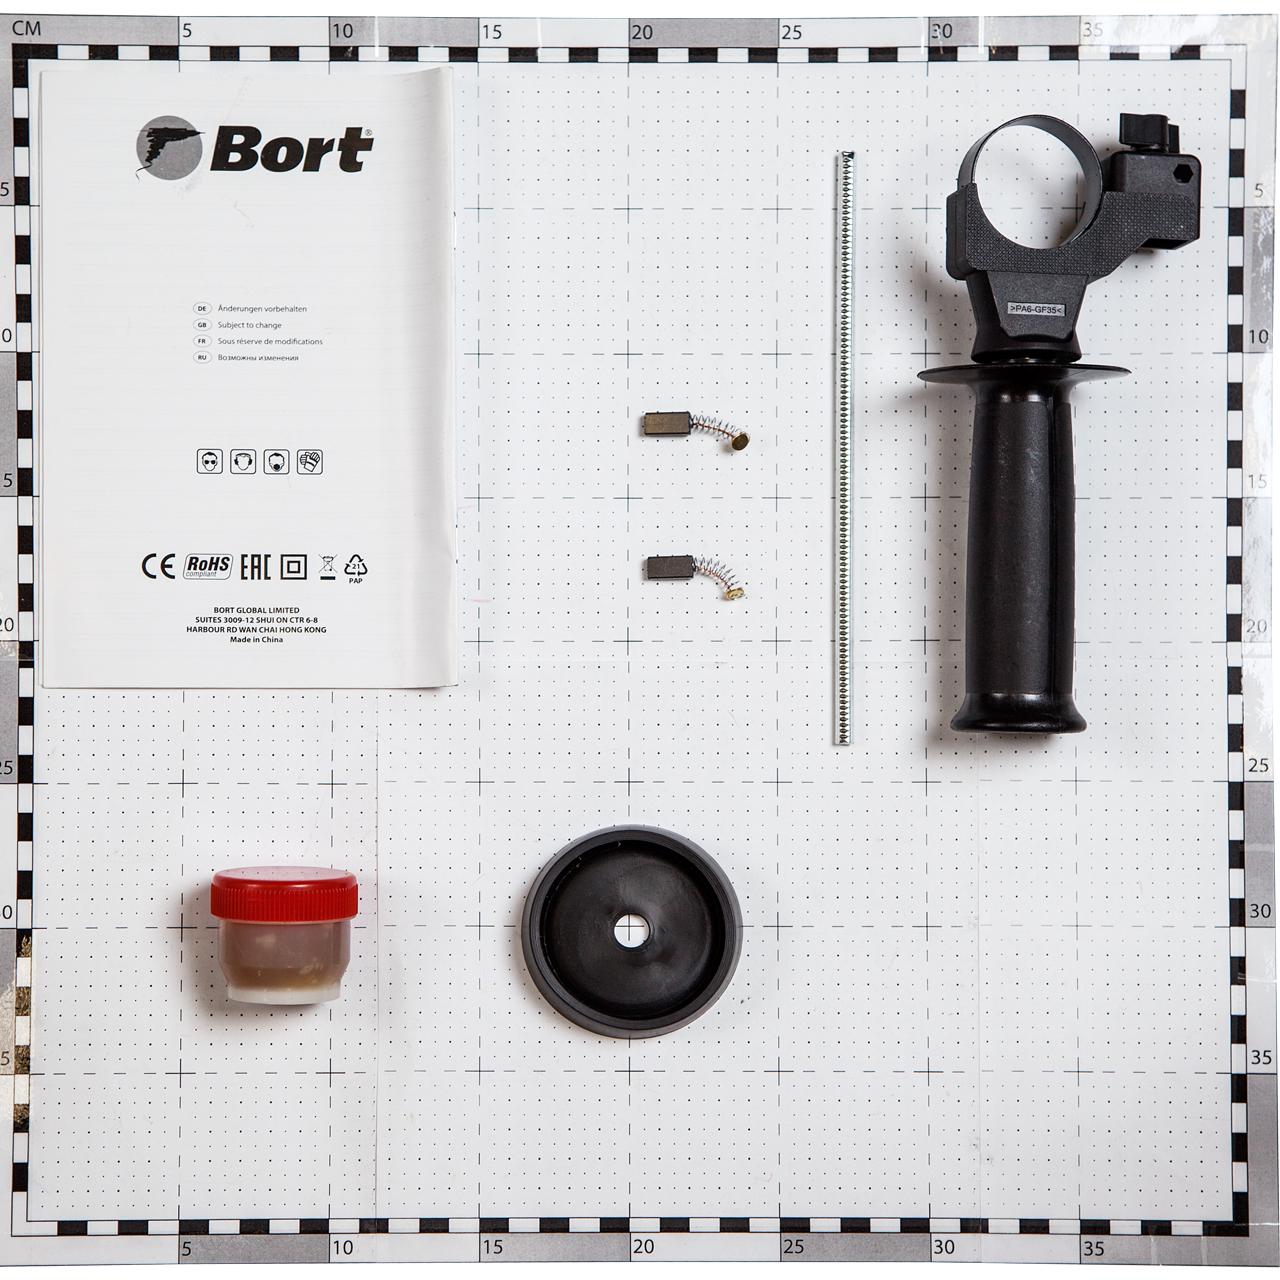  Bort BHD-700-P (91270696)